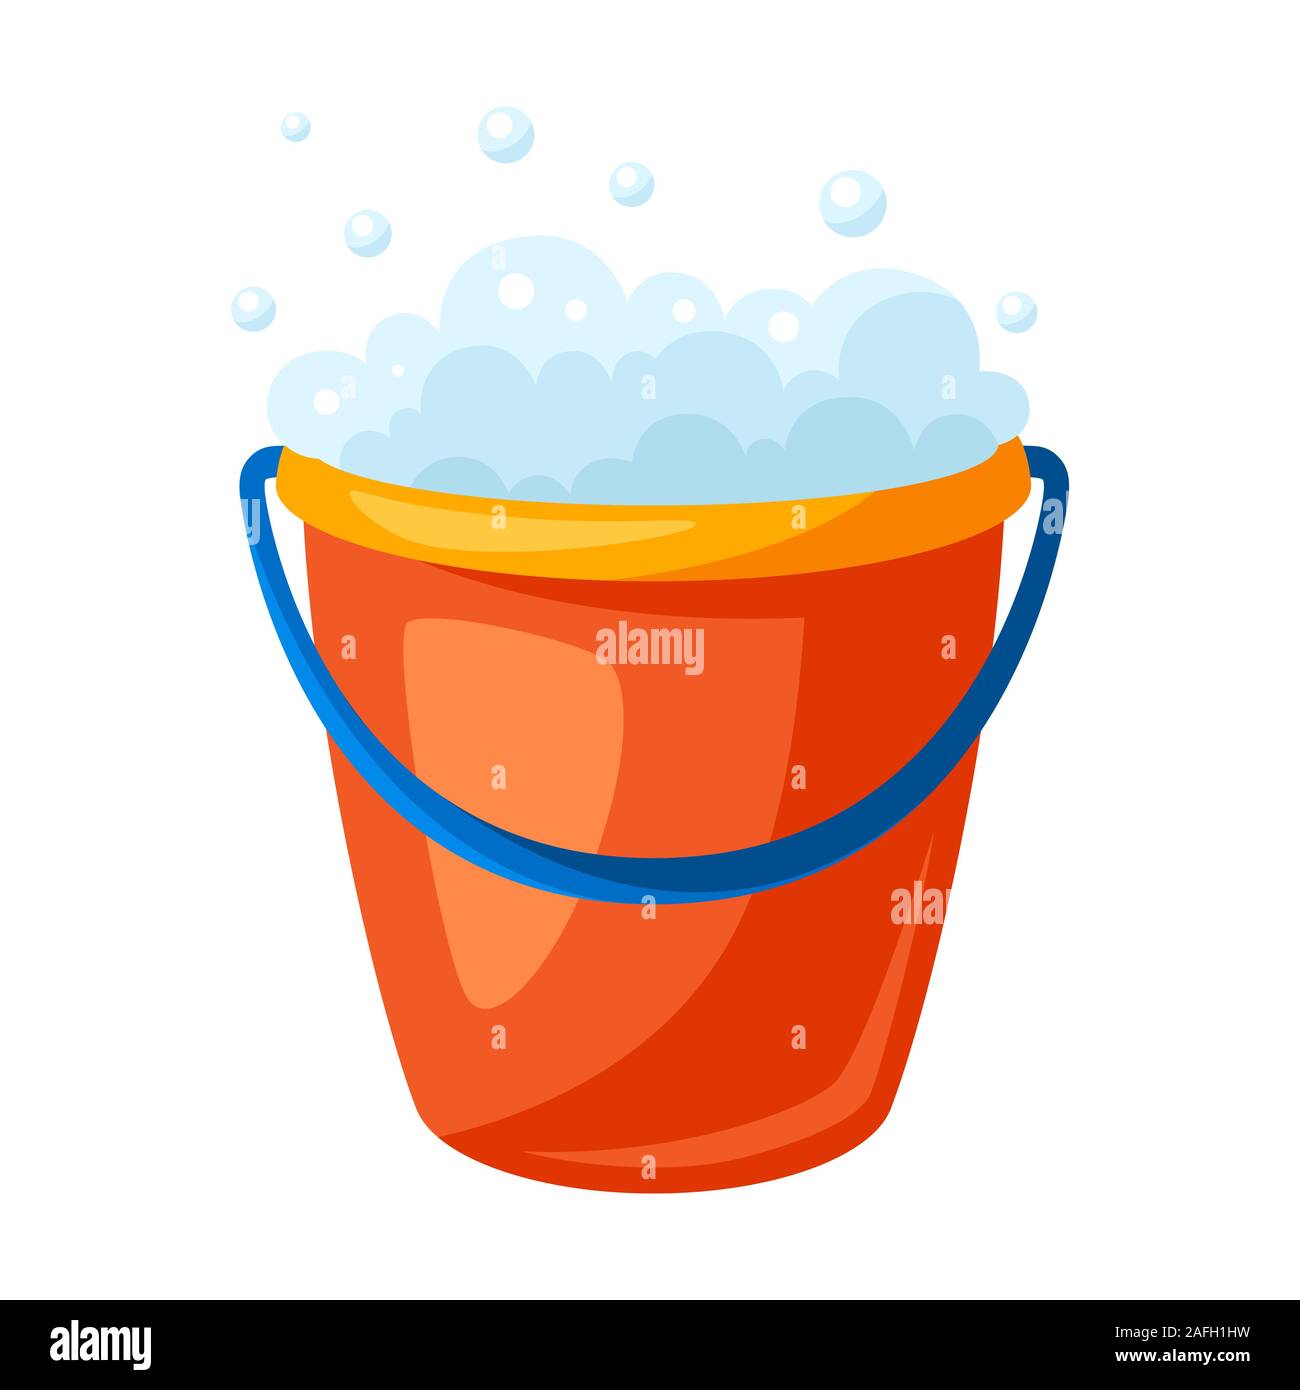 Illustration of soap bucket. Stock Vector